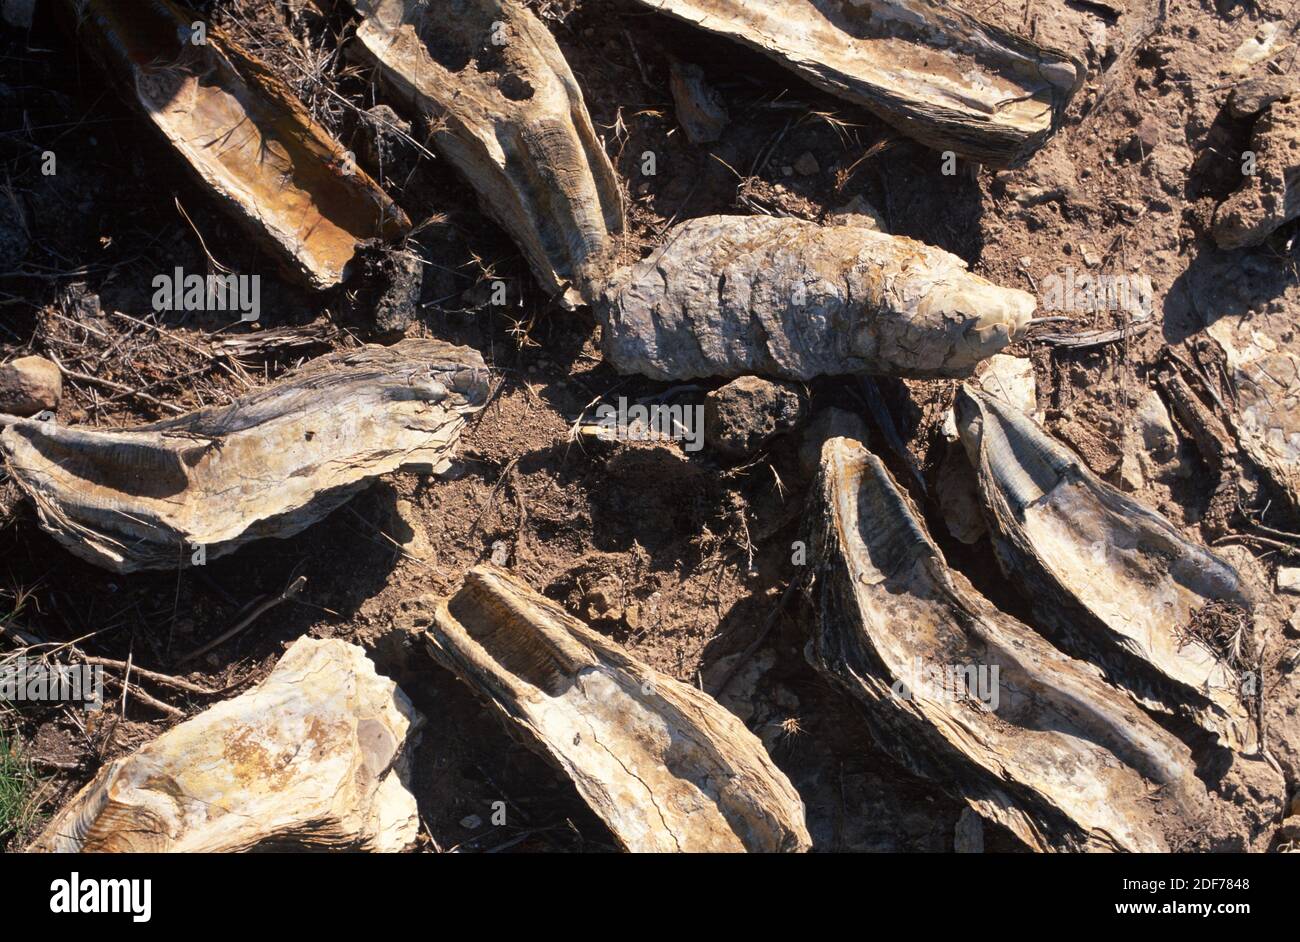 Bivalves fossils (Crasostrea crassissima). This photo was taken in Morocco. Stock Photo